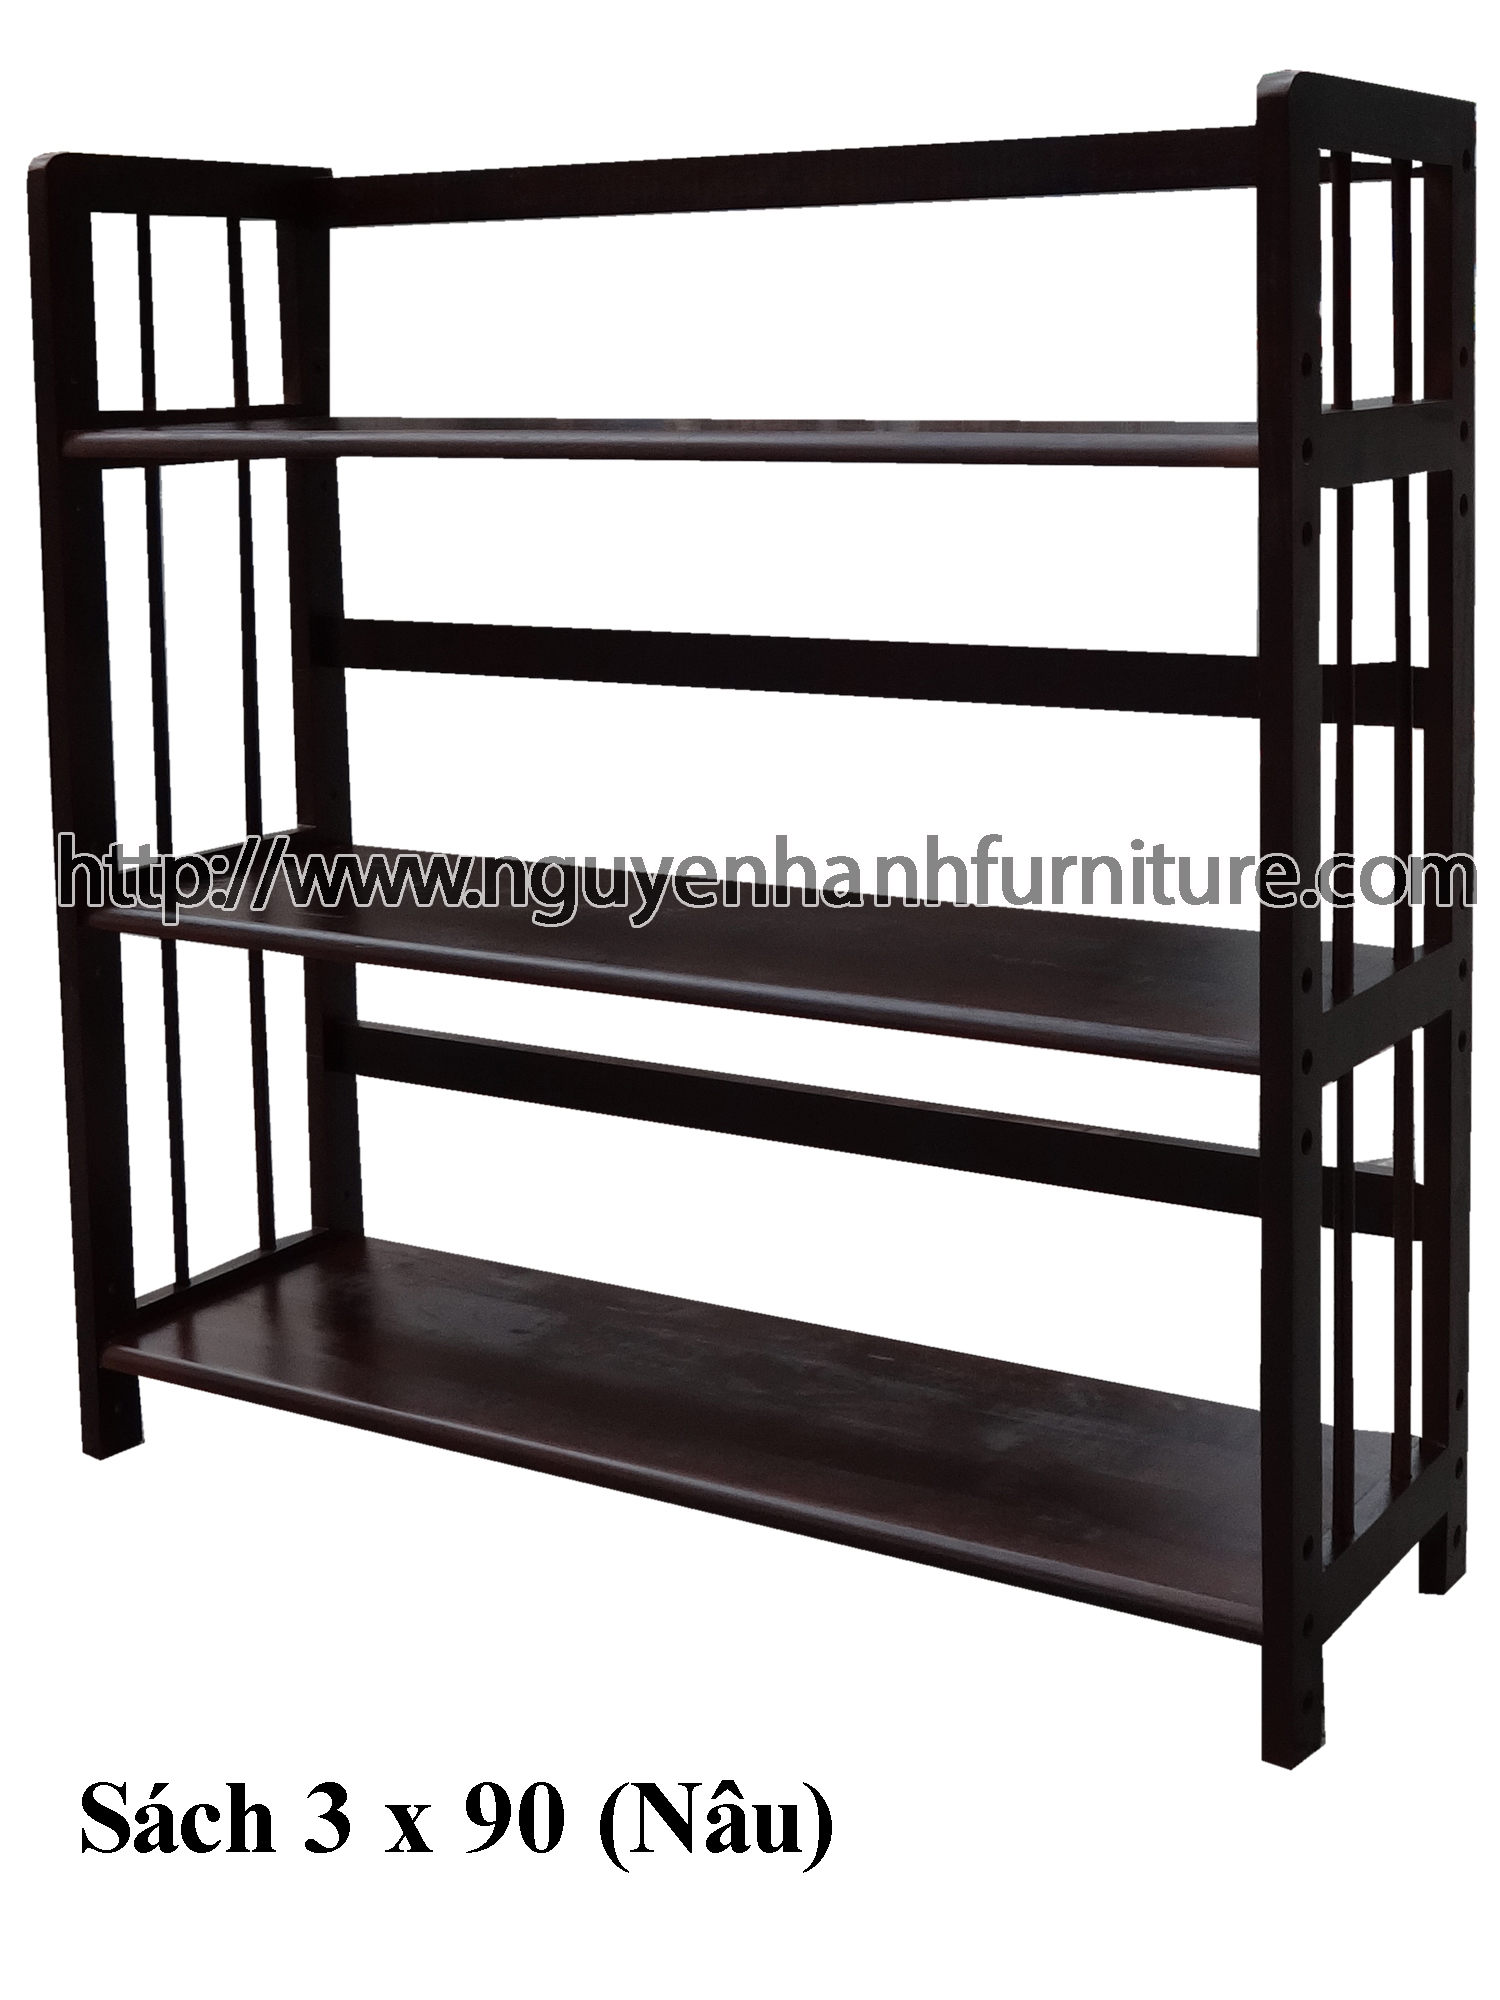 Name product: Triple storey Adjustable Bookshelf 90 (Brown) - Dimensions: 93 x 28 x 90 (H) - Description: Wood natural rubber